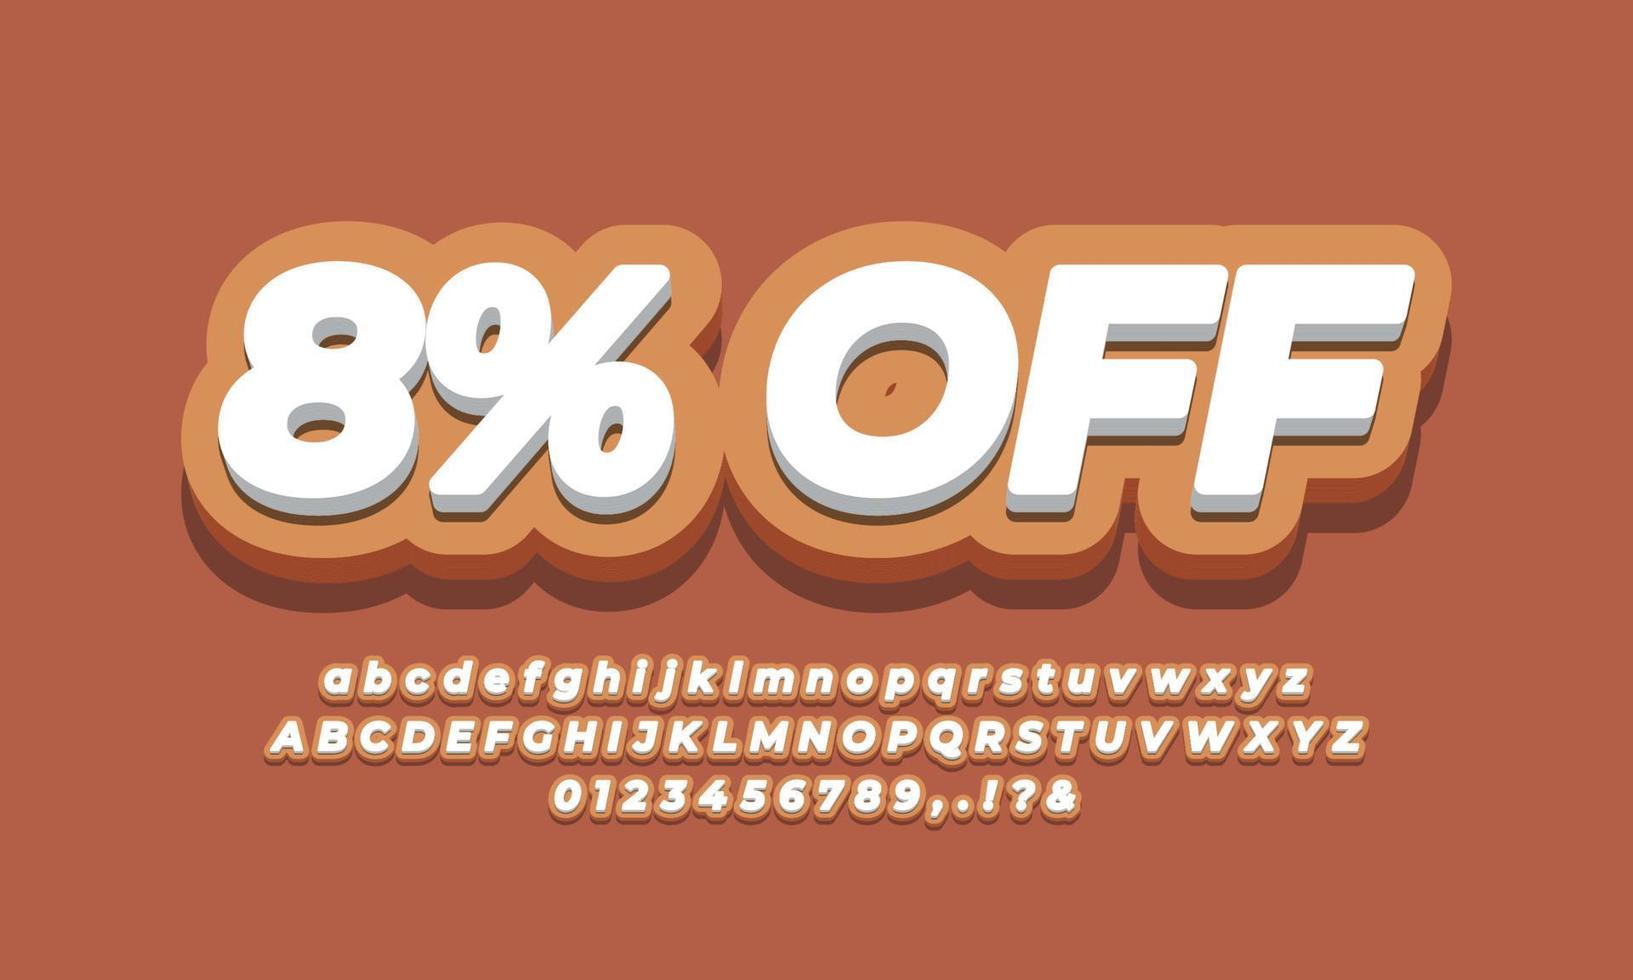 8 por ciento de descuento ocho por ciento venta descuento promoción texto 3d naranja vector